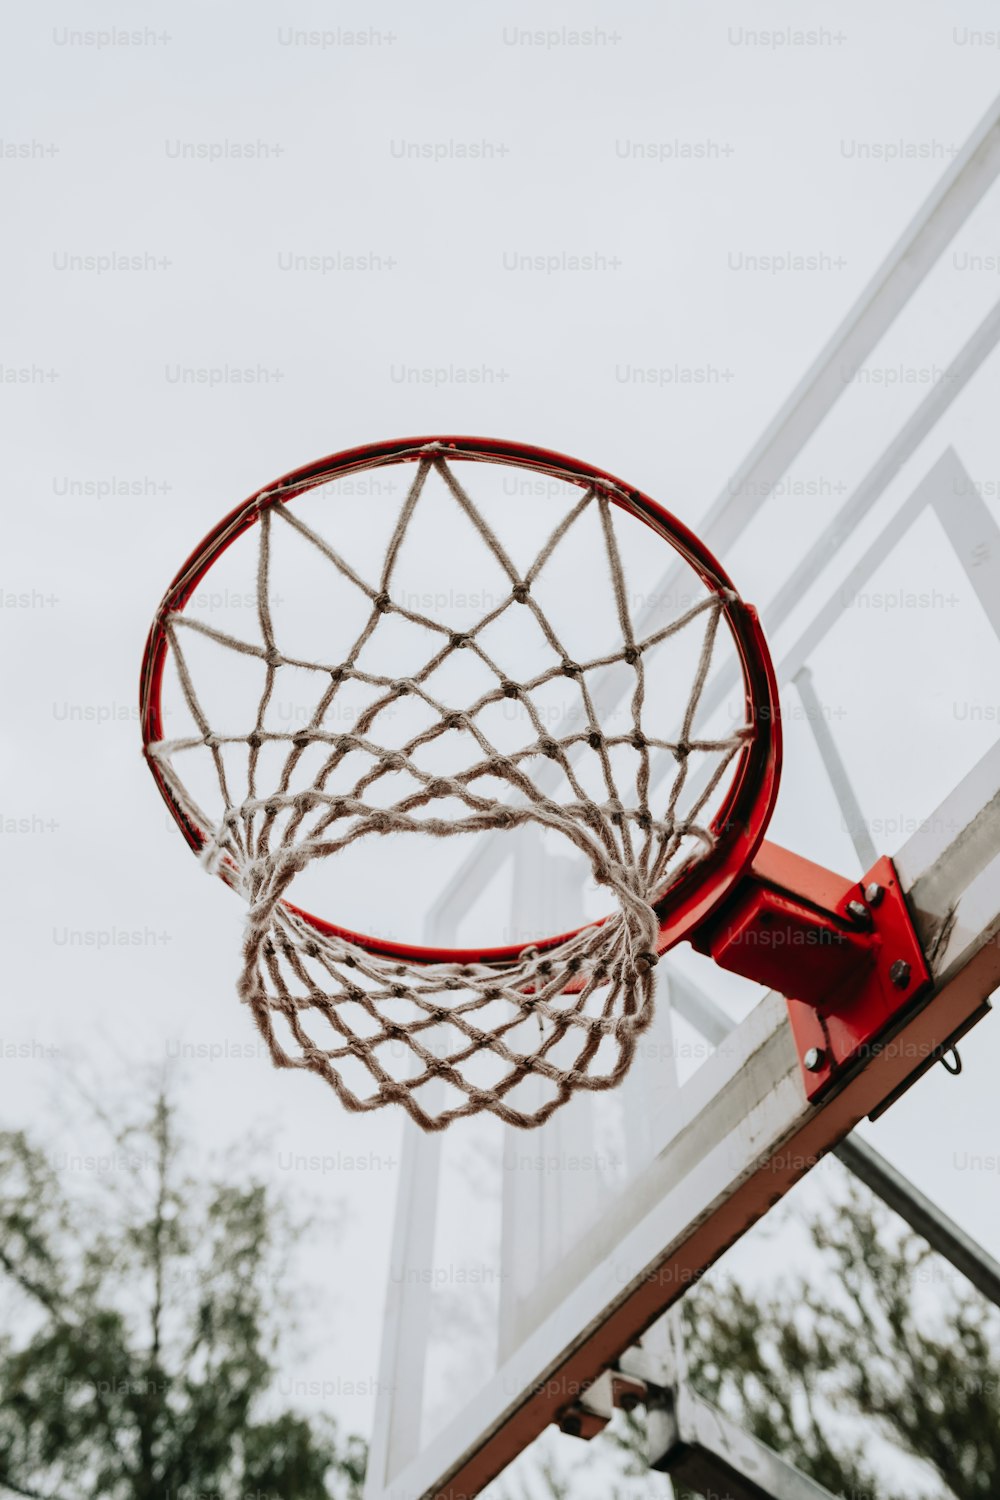 A basketball going through the net of a basketball hoop photo – Basketball  court Image on Unsplash